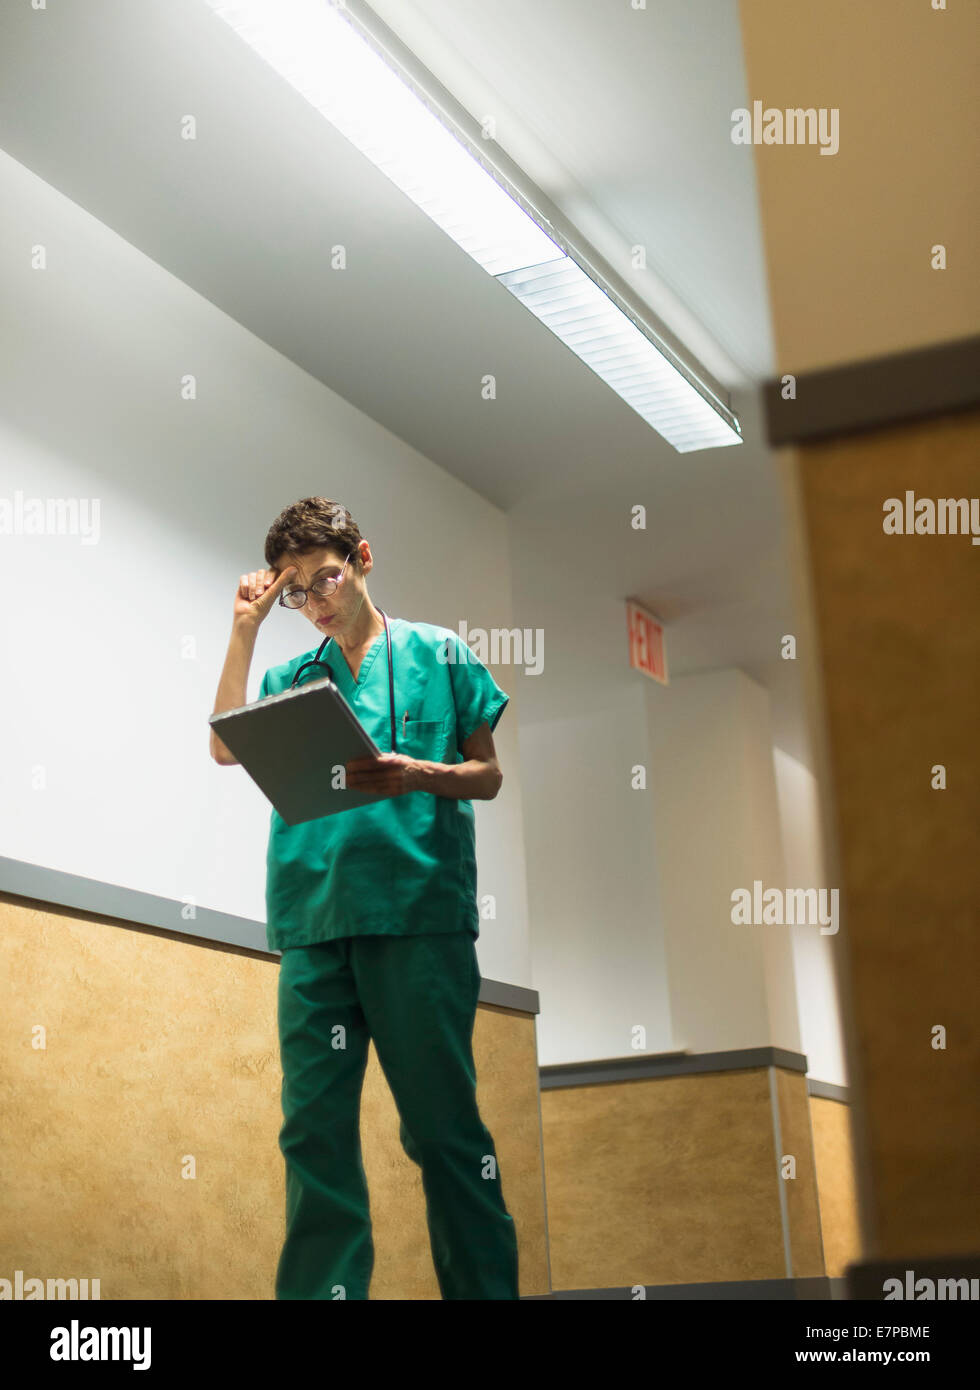 Female doctor in hospital corridor Stock Photo